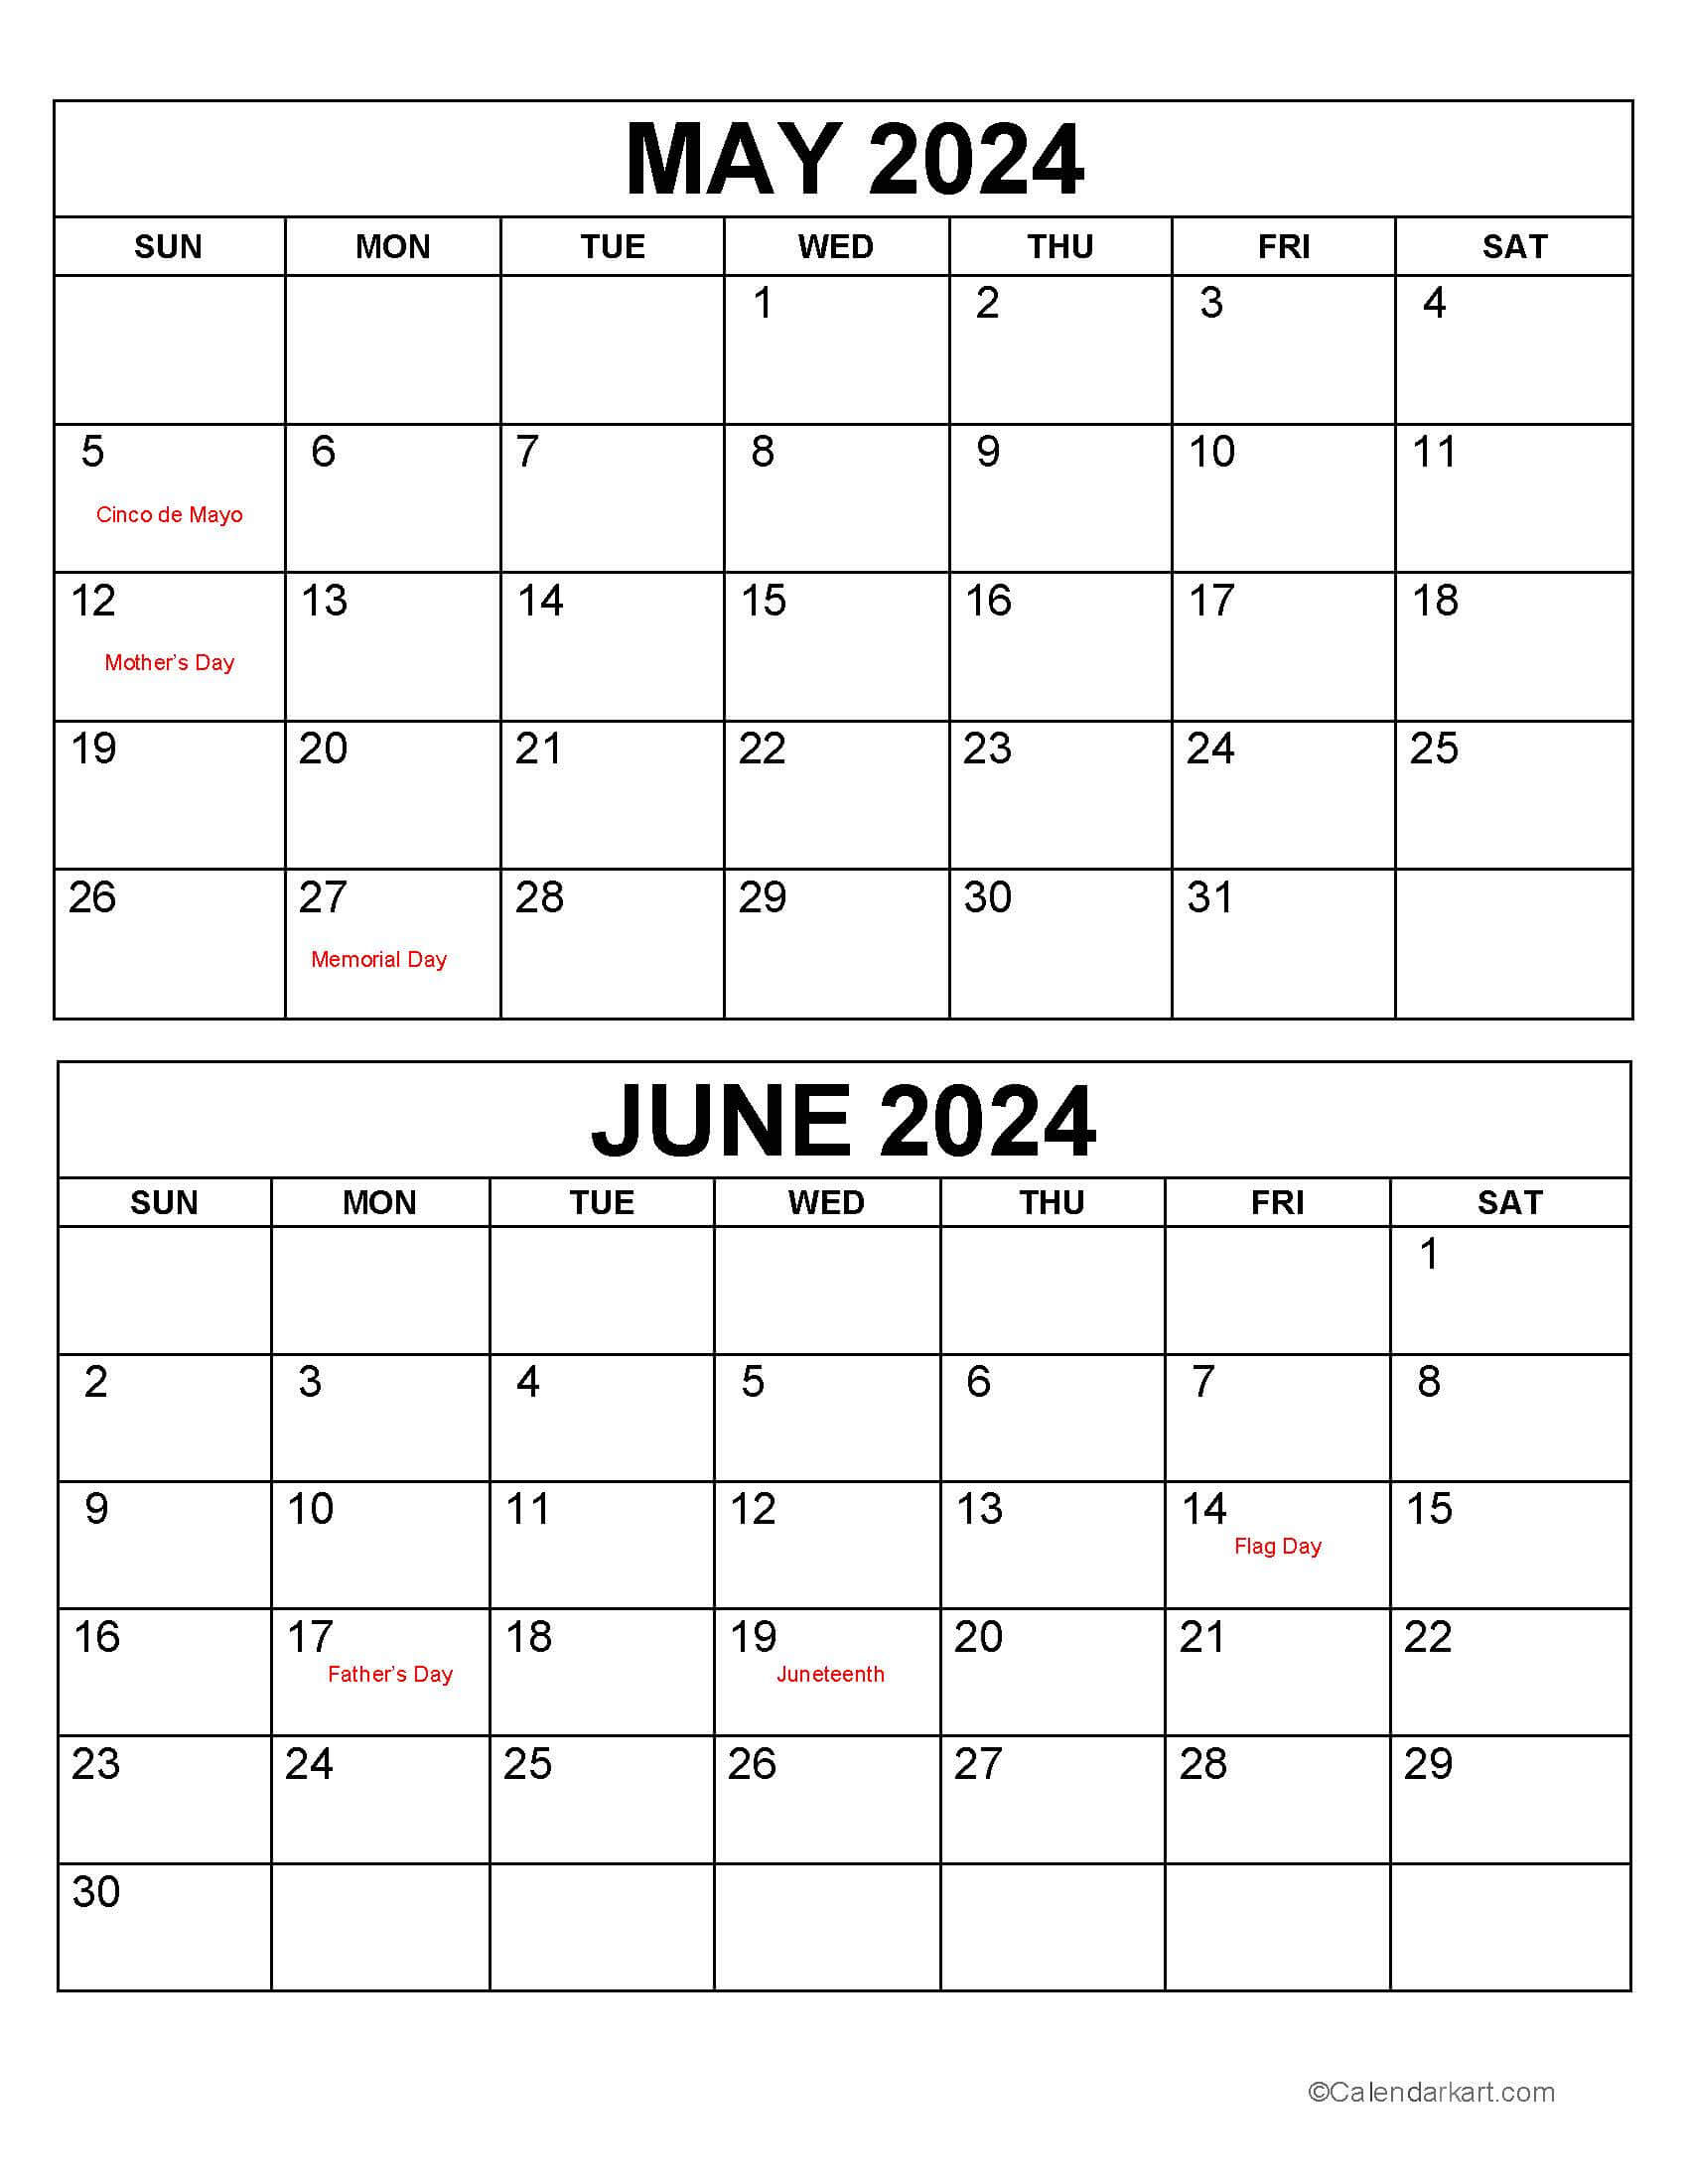 May June 2024 Calendars (3Rd Bi-Monthly) - Calendarkart throughout 2024 Calendar May June July